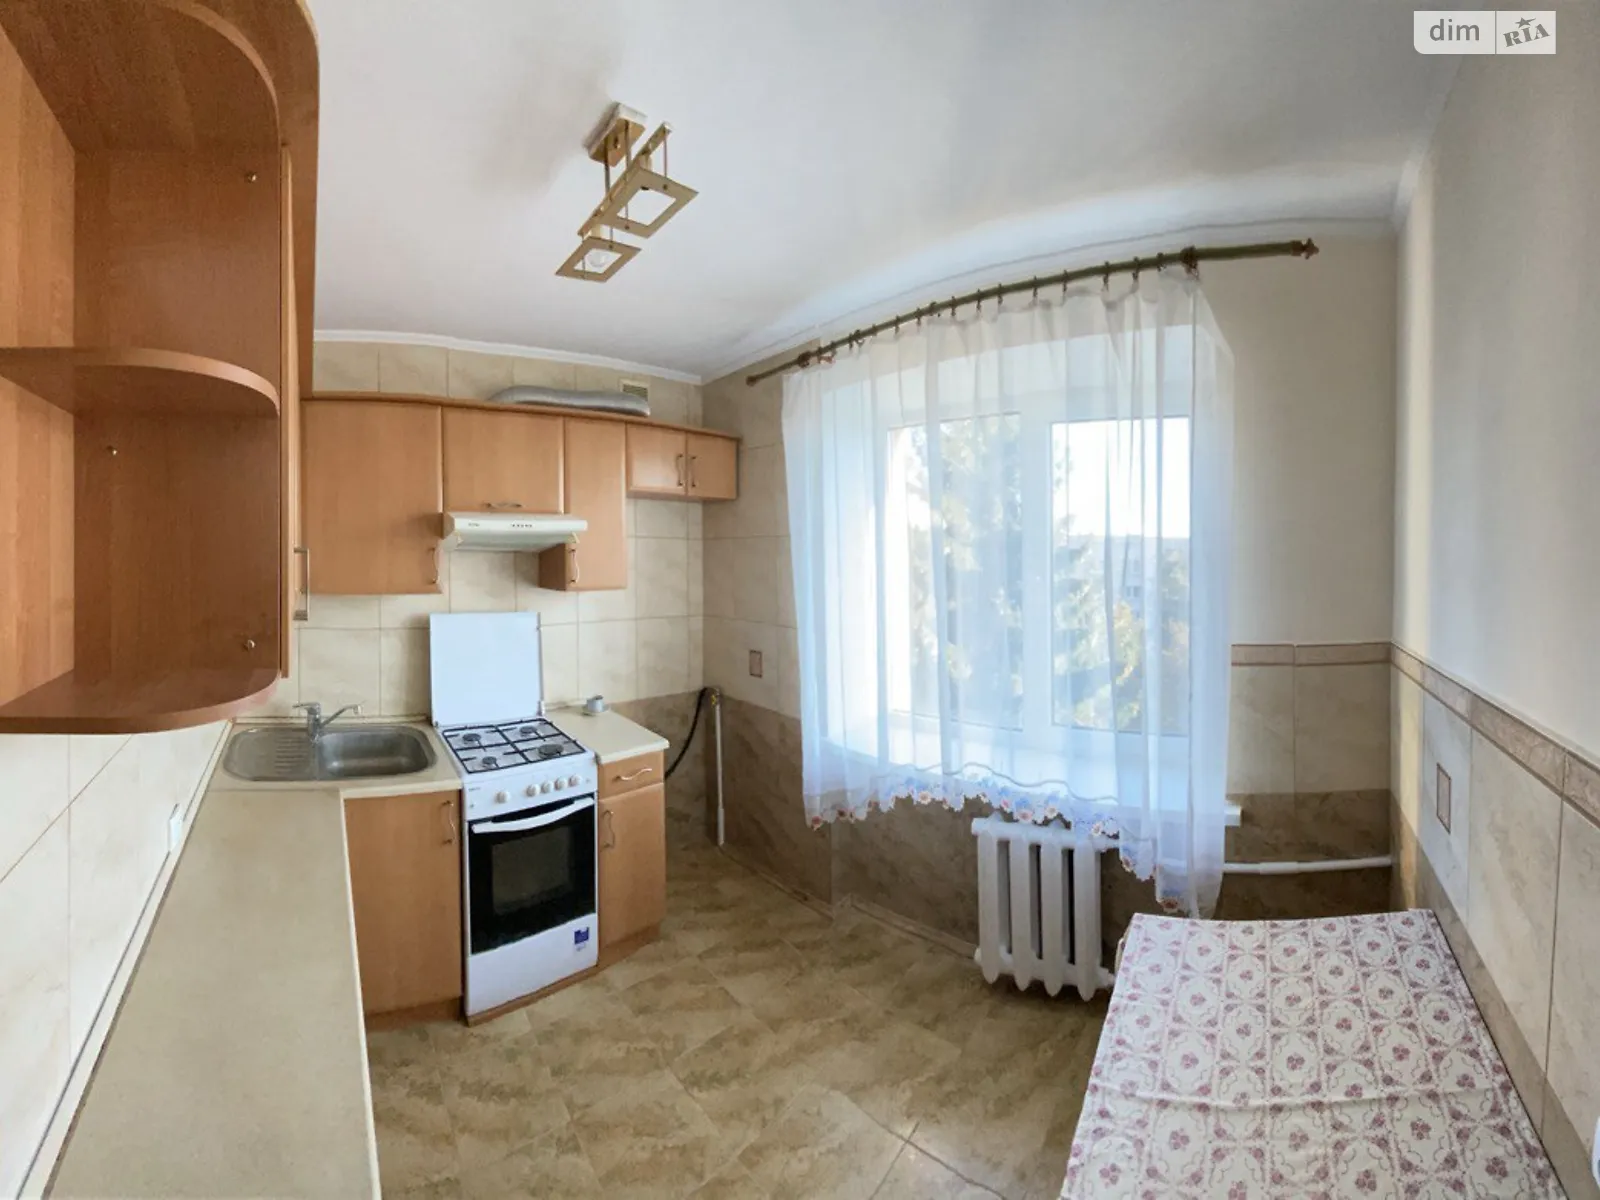 Сдается в аренду 2-комнатная квартира 50 кв. м в Ровно, ул. Мицкевича, 3 - фото 1